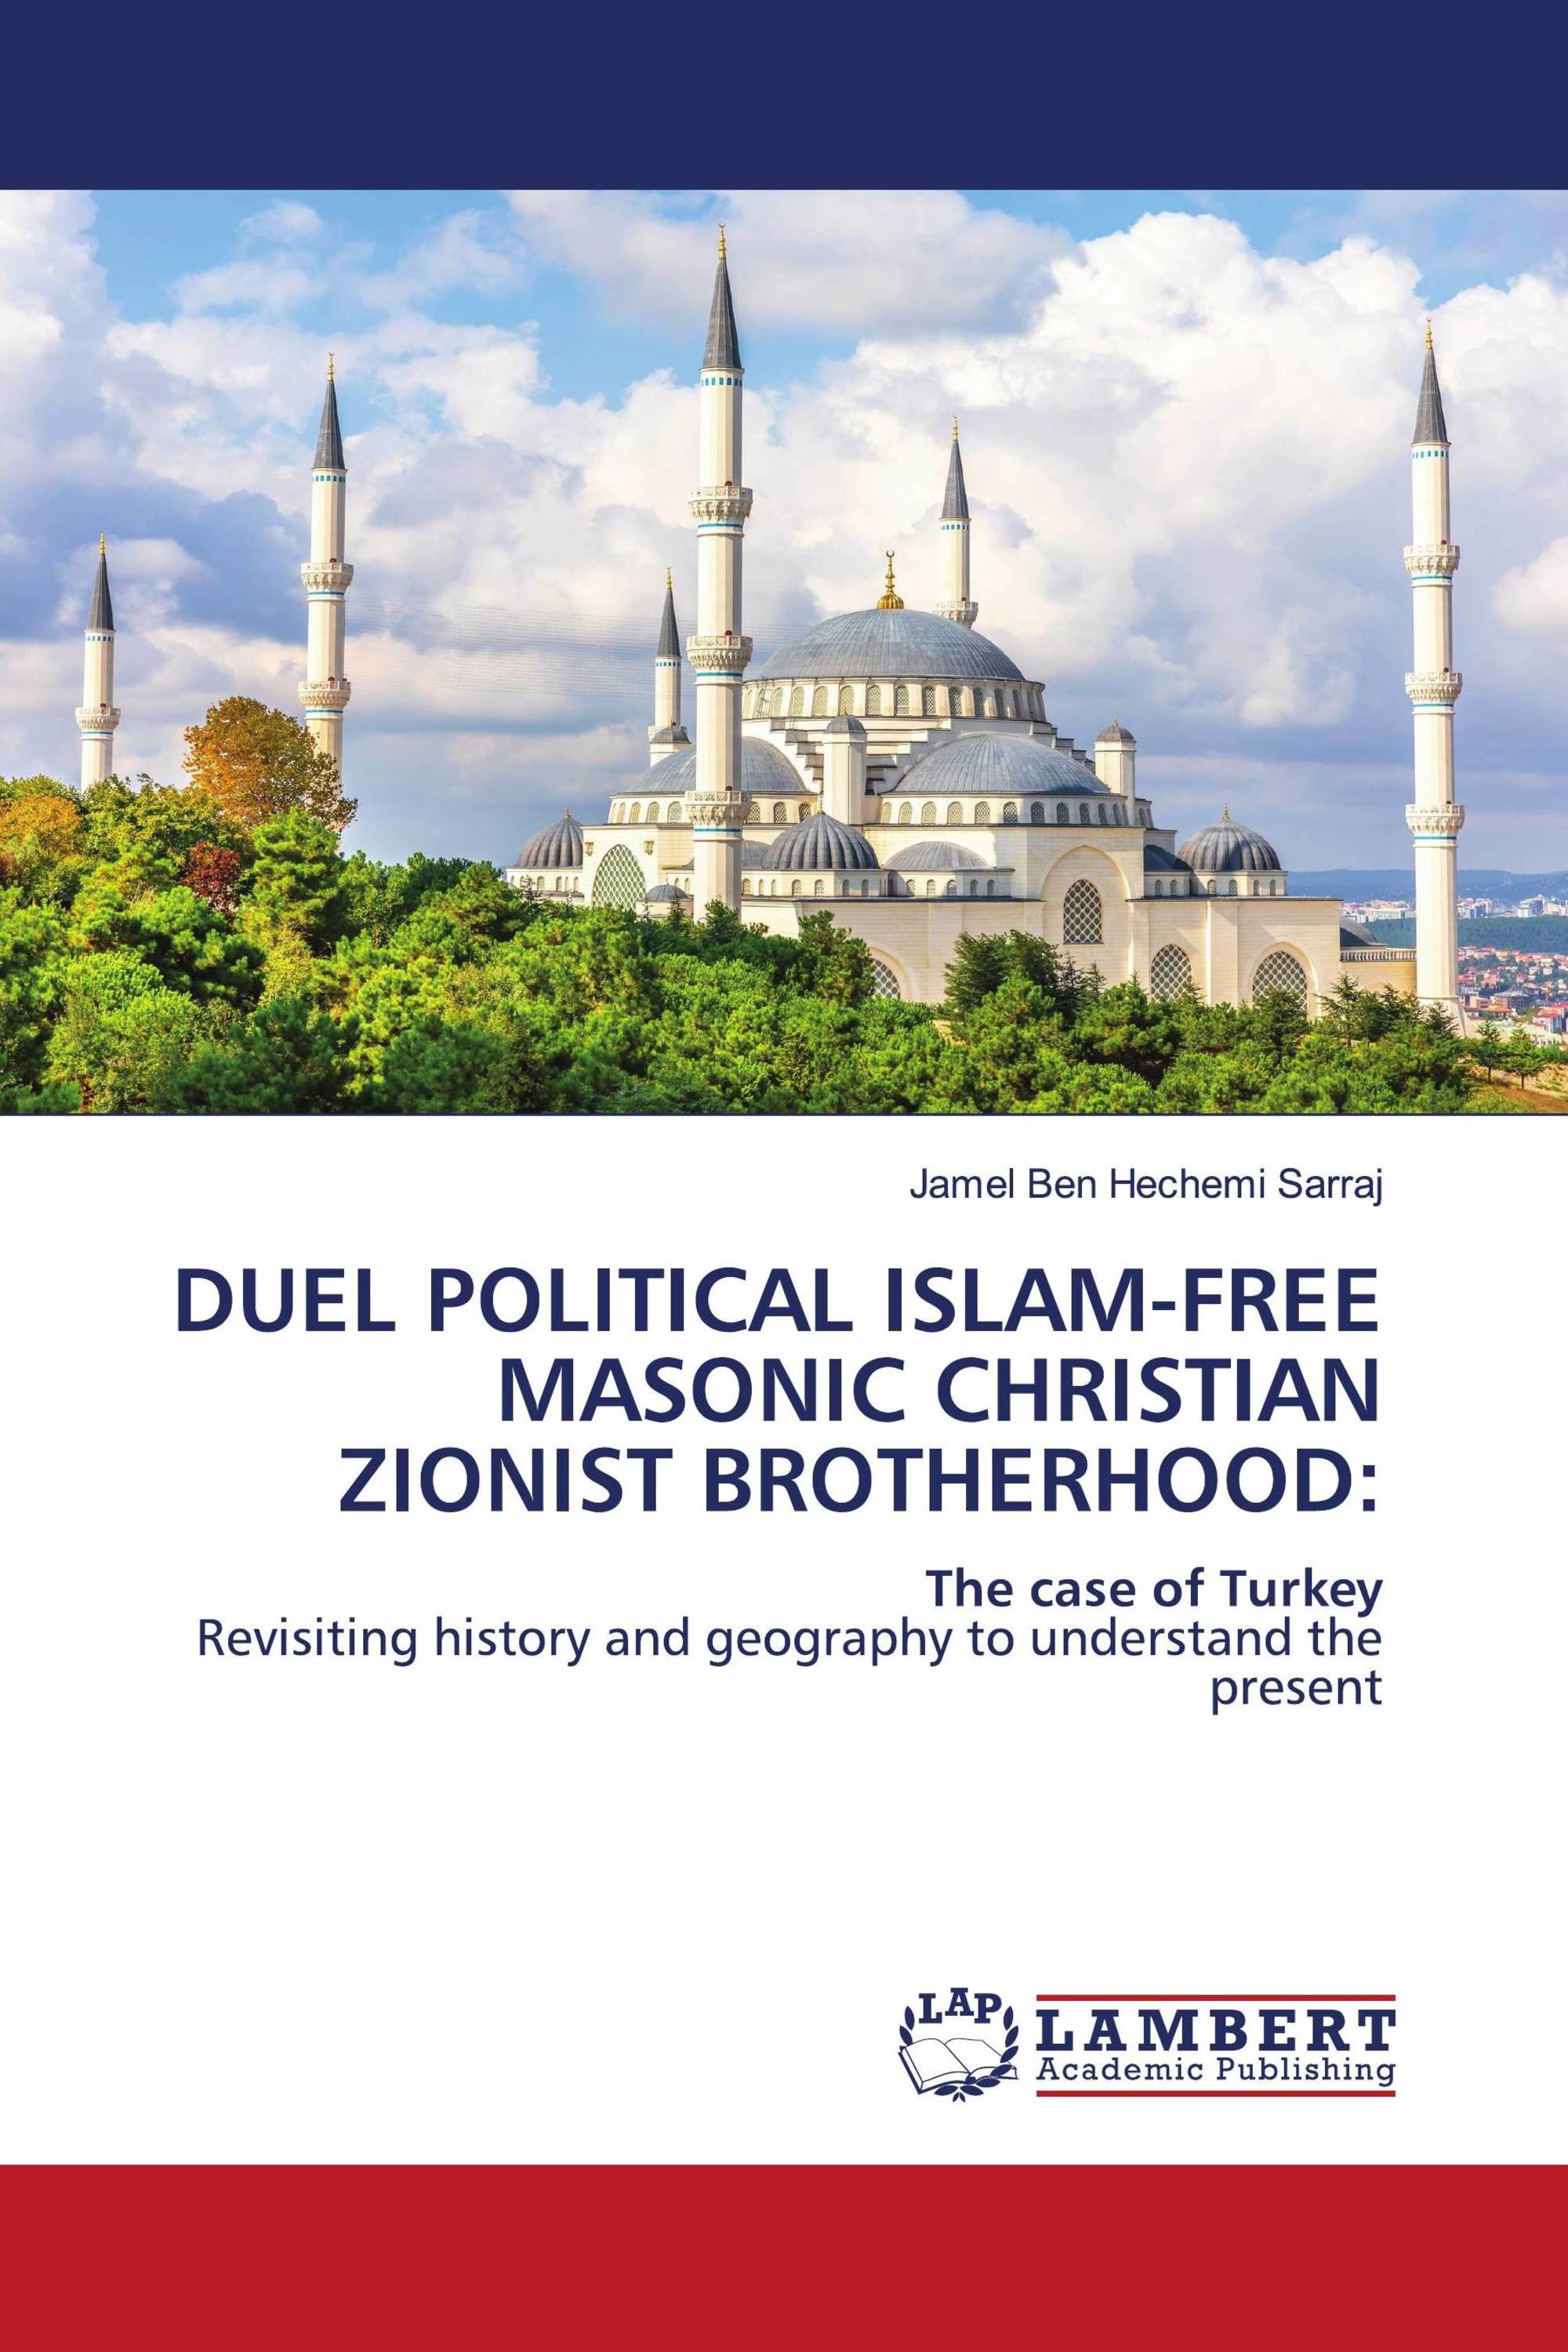 DUEL POLITICAL ISLAM-FREE MASONIC CHRISTIAN ZIONIST BROTHERHOOD: